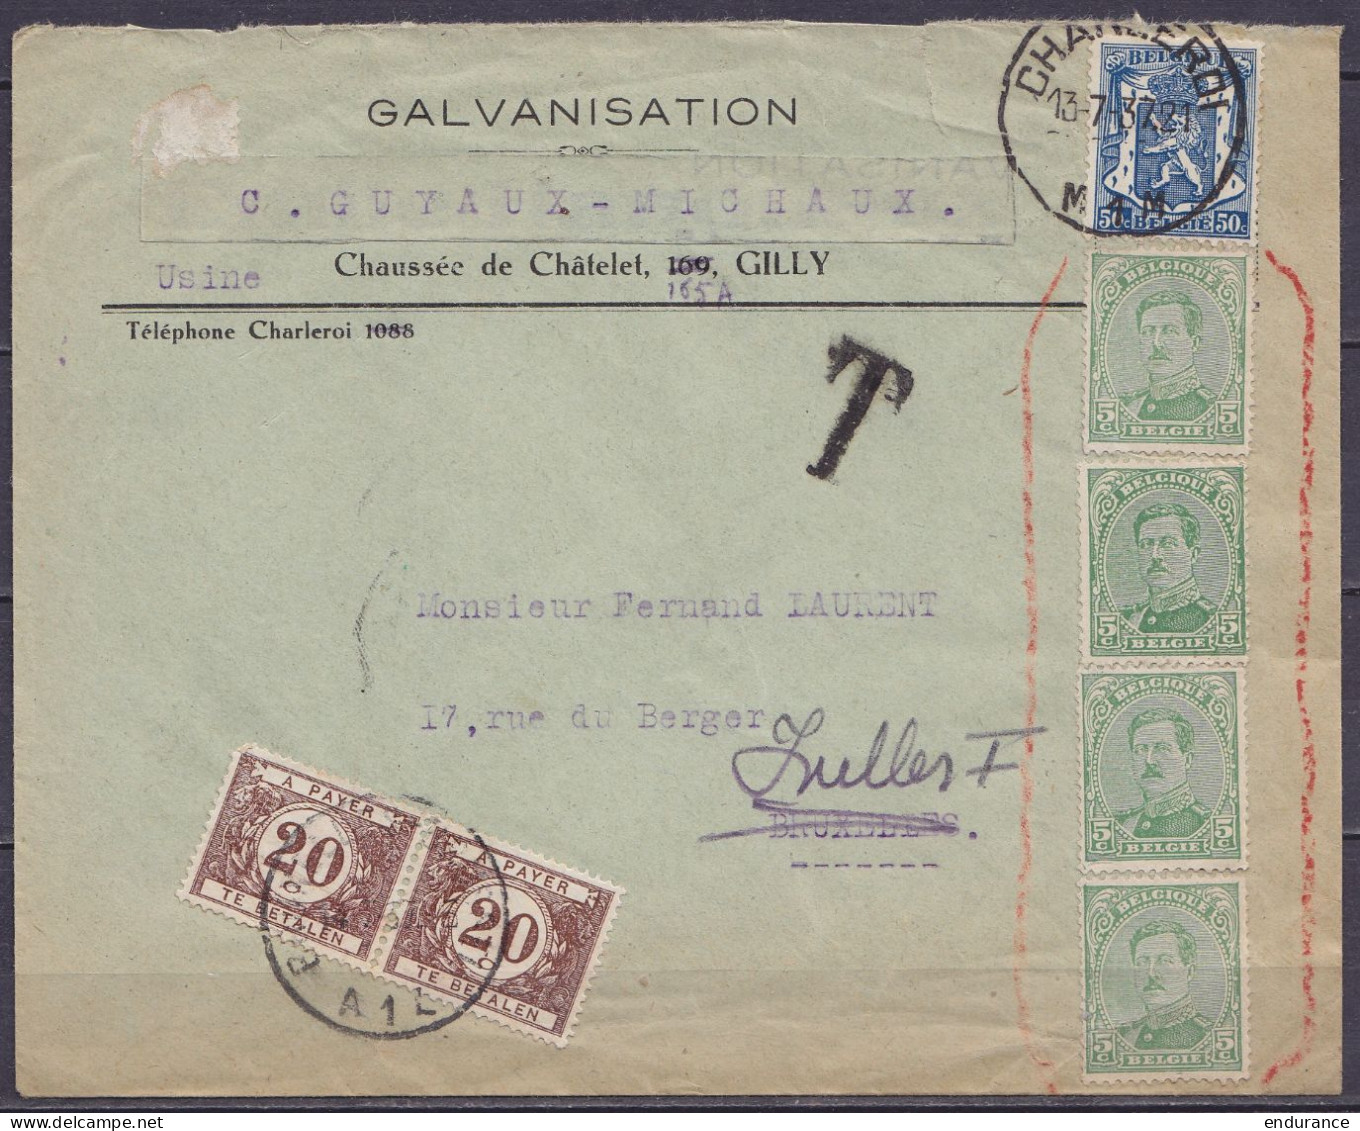 Env. "Galvanisation Guyaux-Michaux Gilly" Affr. Bande 4x N°137 (annulés Car Hors-cours) + N°426 Càd CHARLEROI /13-7-1937 - 1915-1920 Albert I